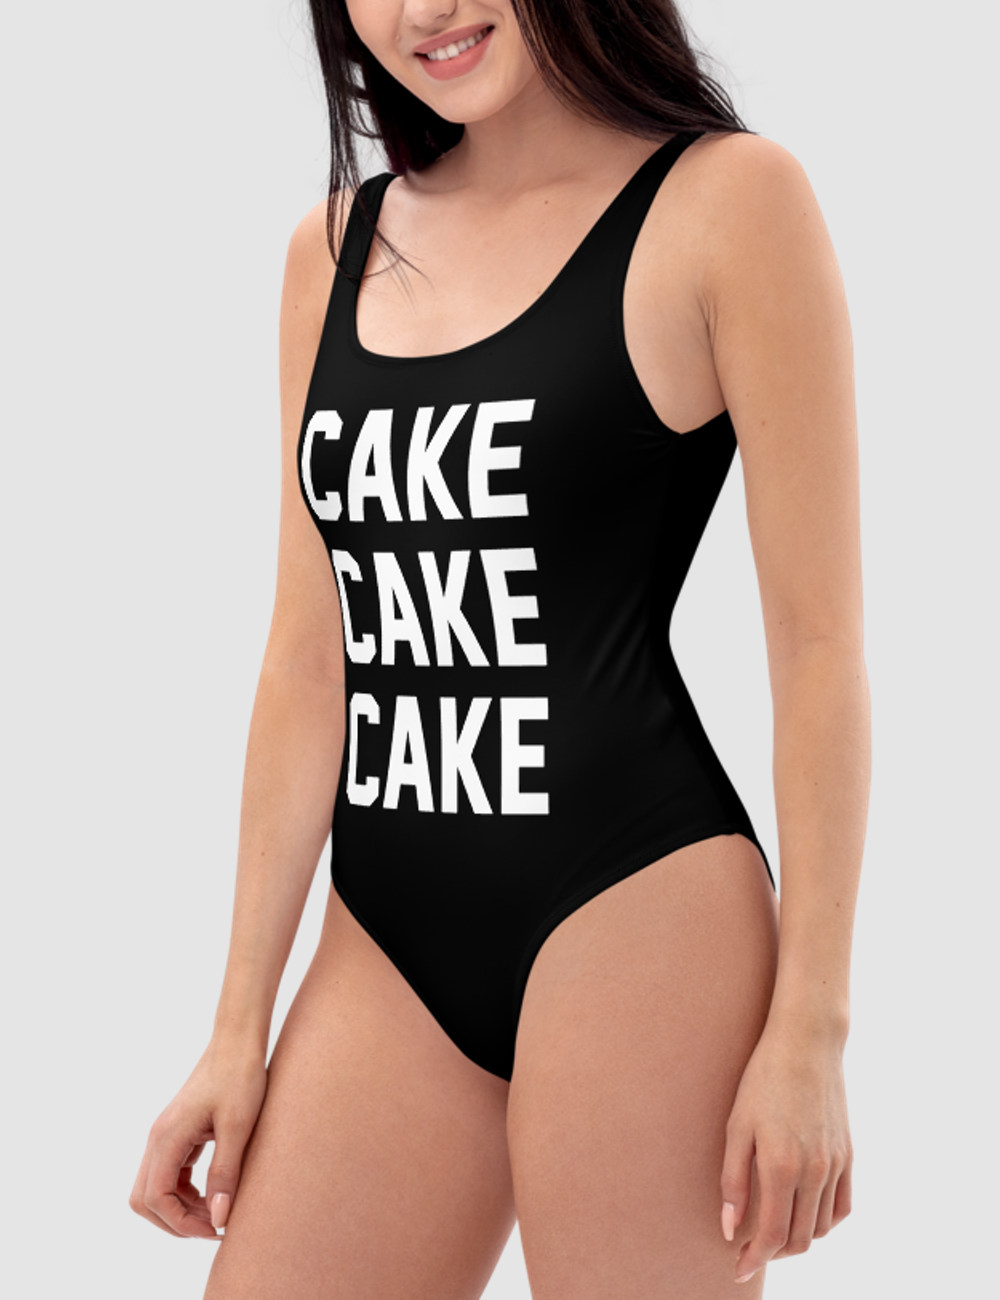 Cake Cake Cake | Women's One-Piece Swimsuit OniTakai